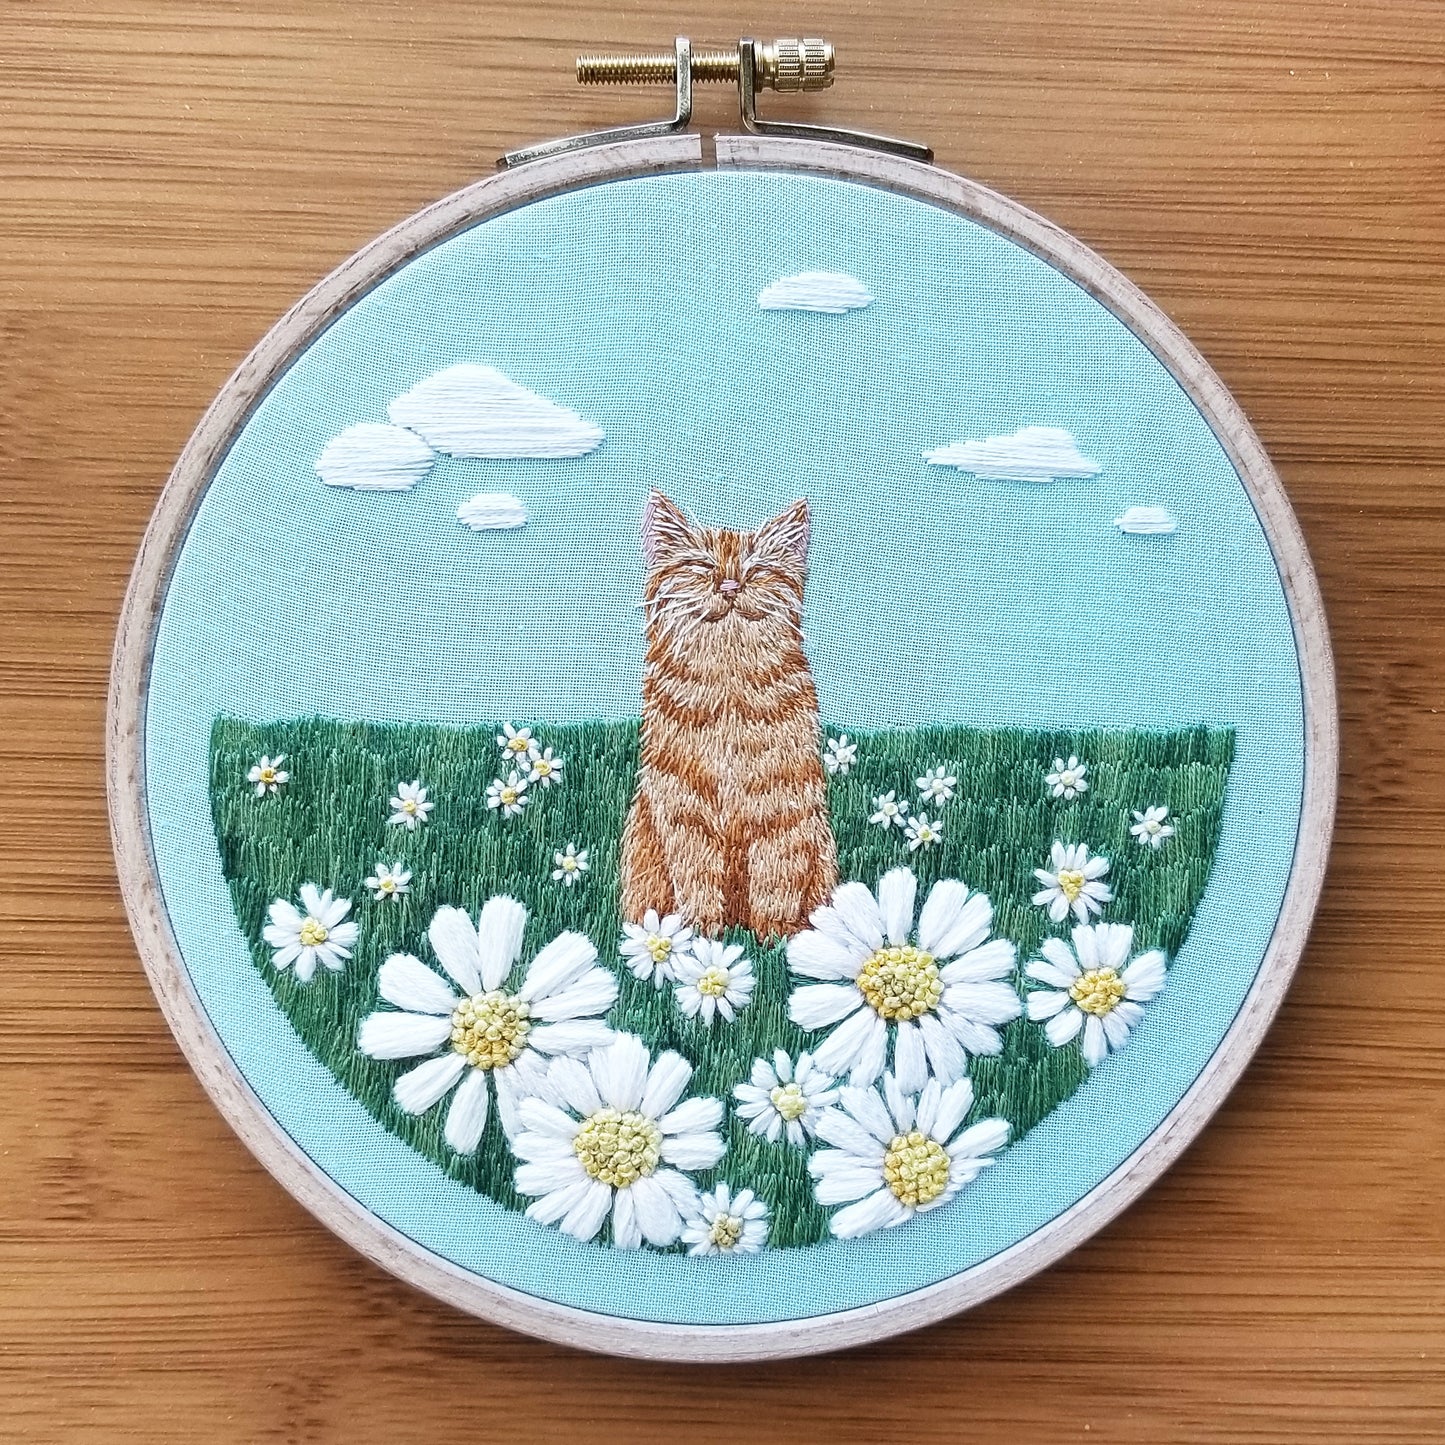 DIY Embroidery Kits from Melisa Joy — ImagiKnit